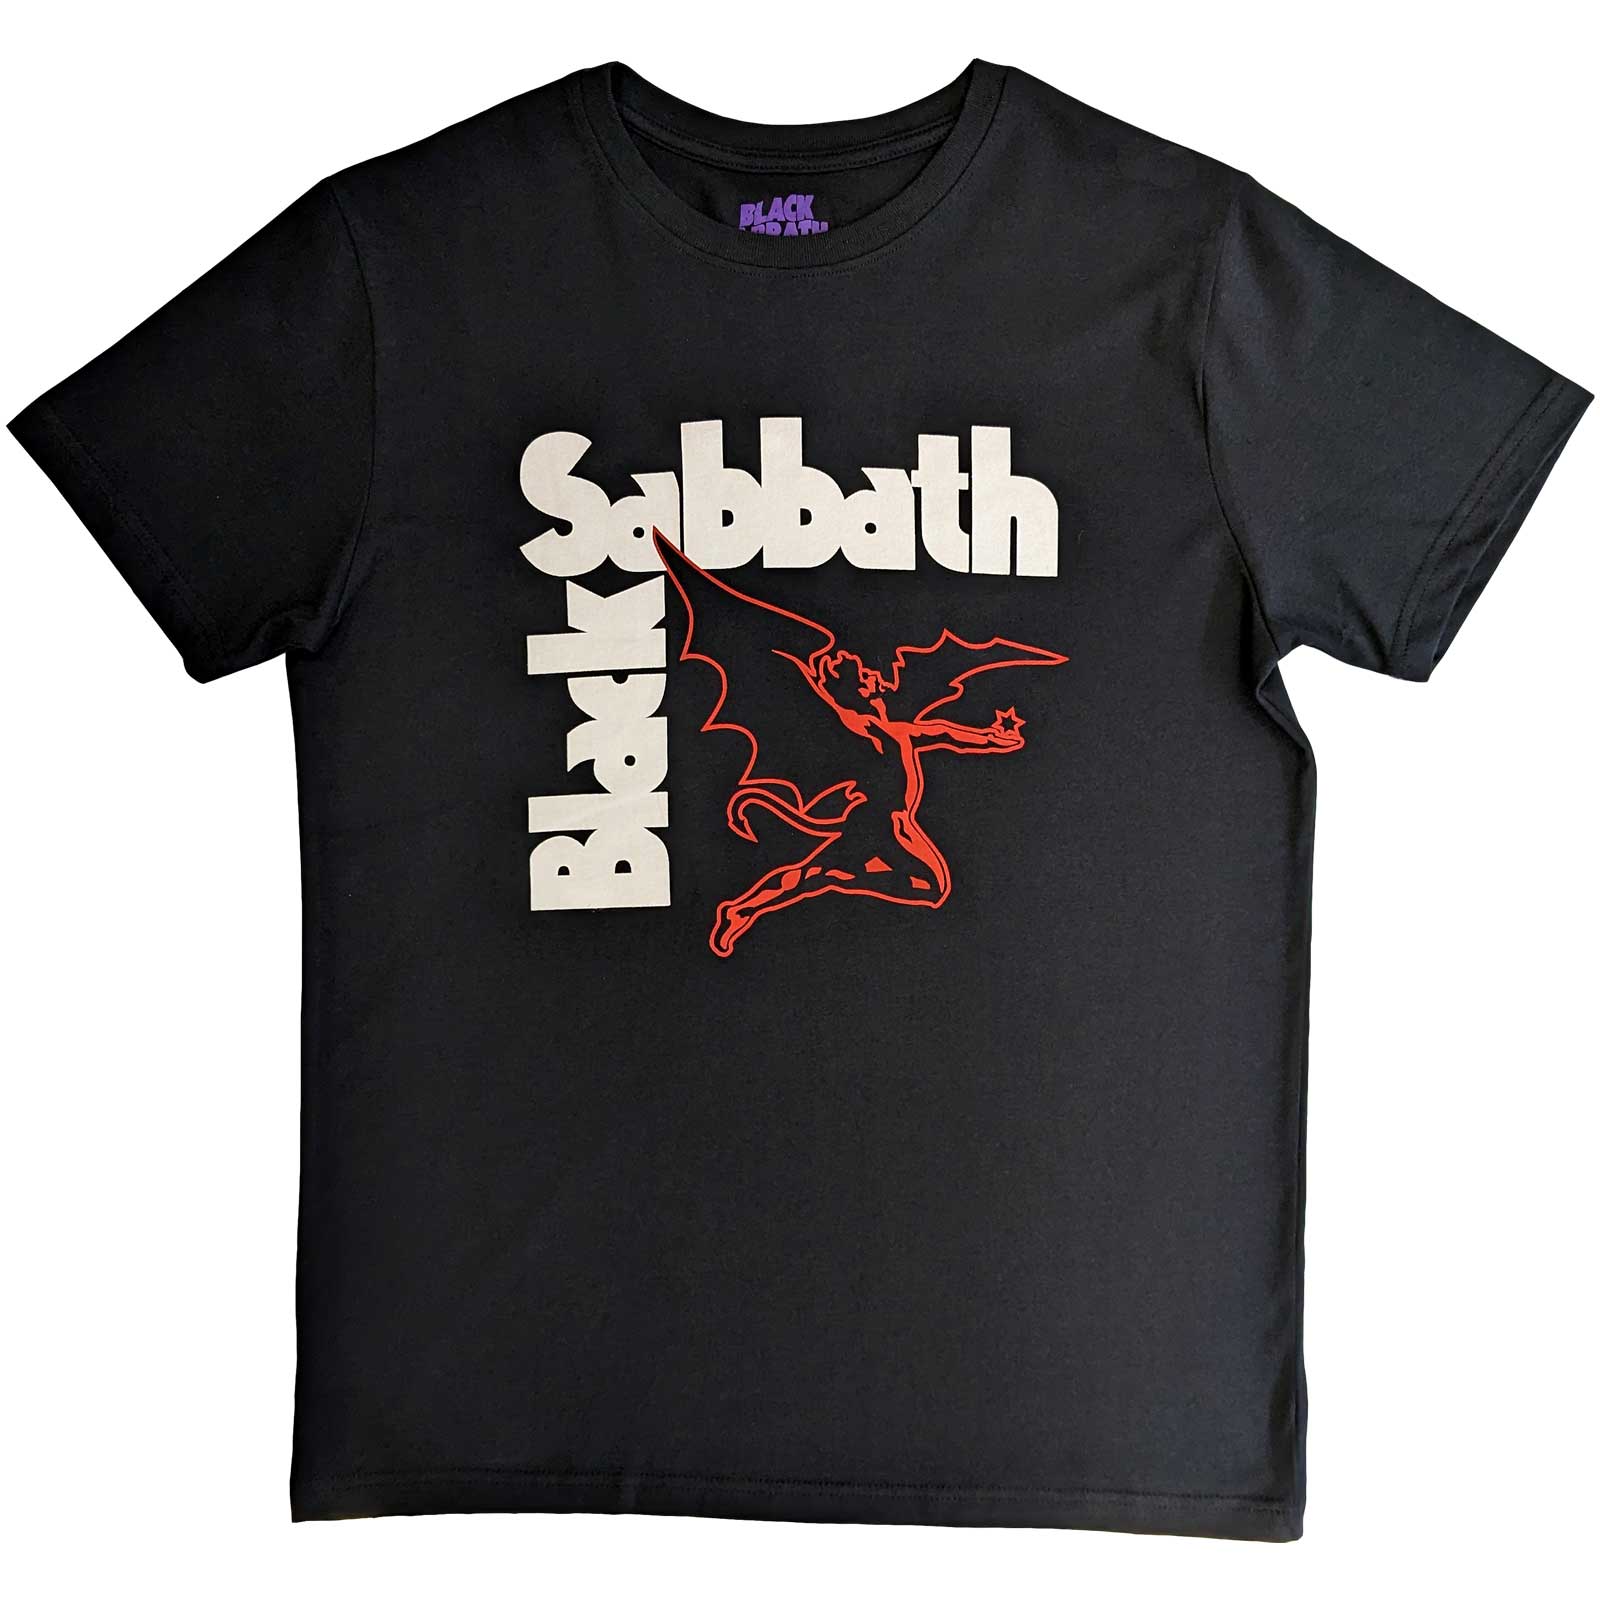 Black Sabbath T-Shirt - Fallen Angel (Unisex)